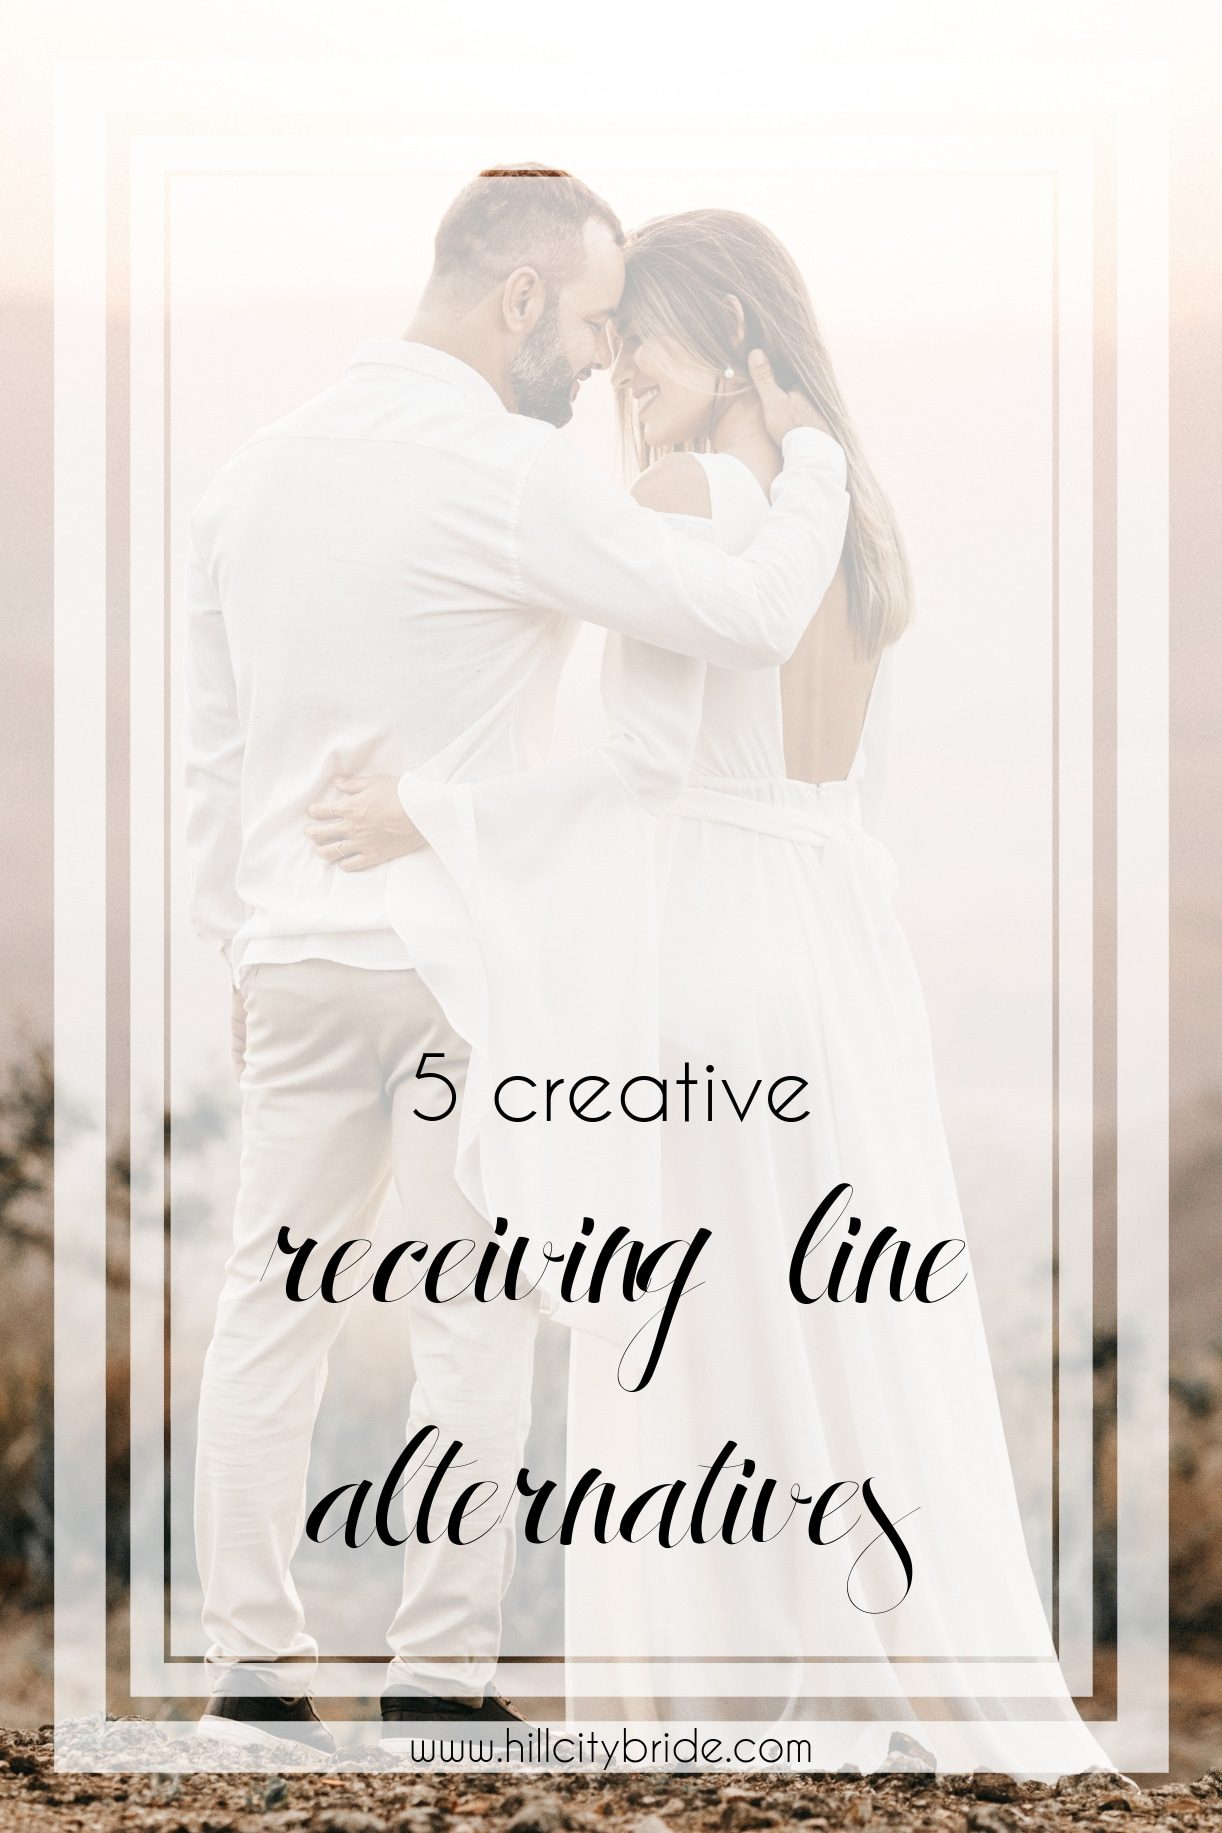 Creative Receiving Line Alternatives for Your Wedding Day | Hill City Bride Weddings Blog